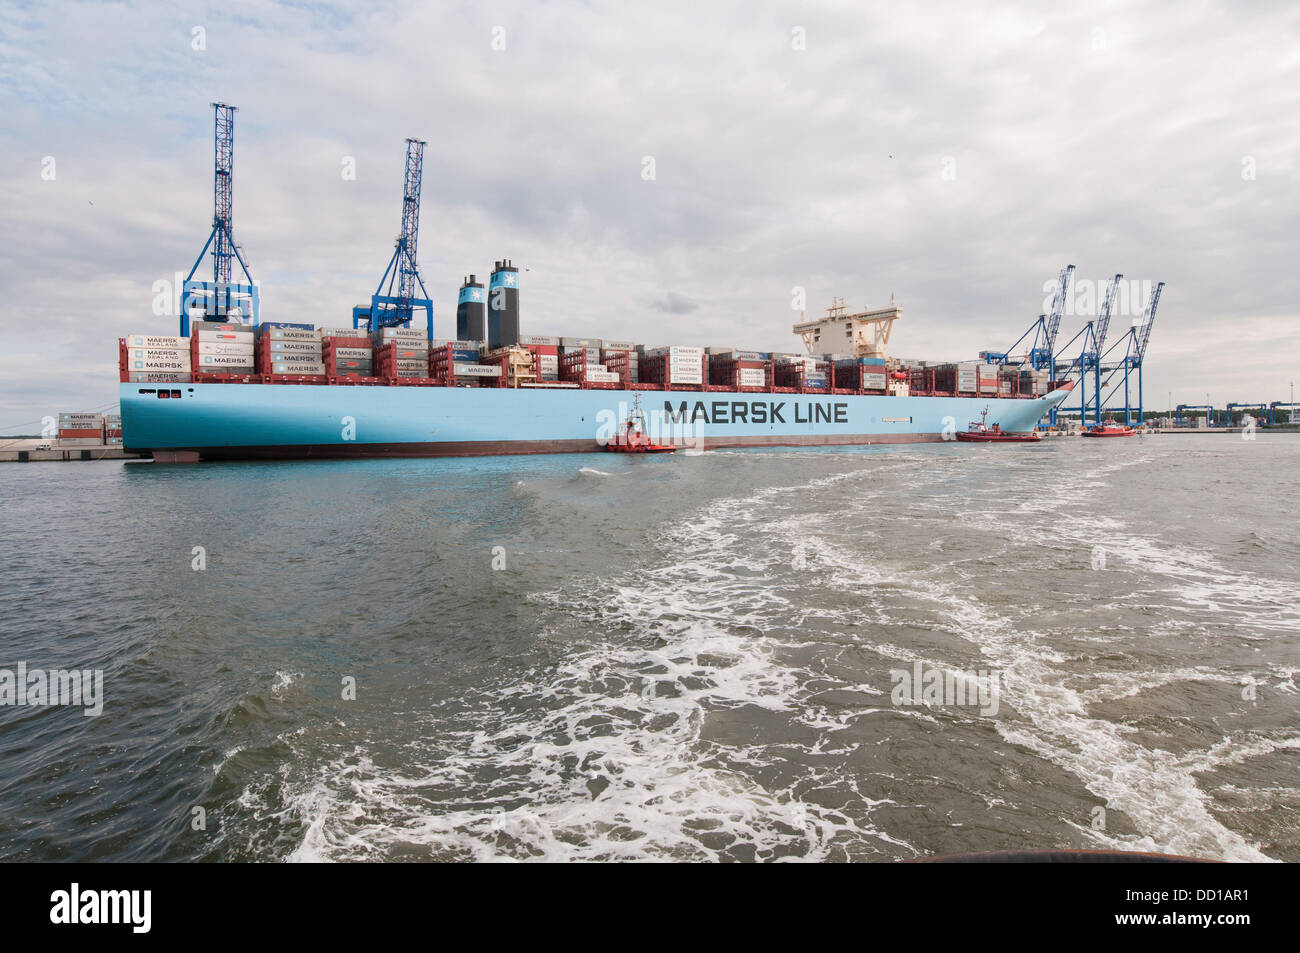 Maersk triple e class container ship -Fotos und -Bildmaterial in hoher